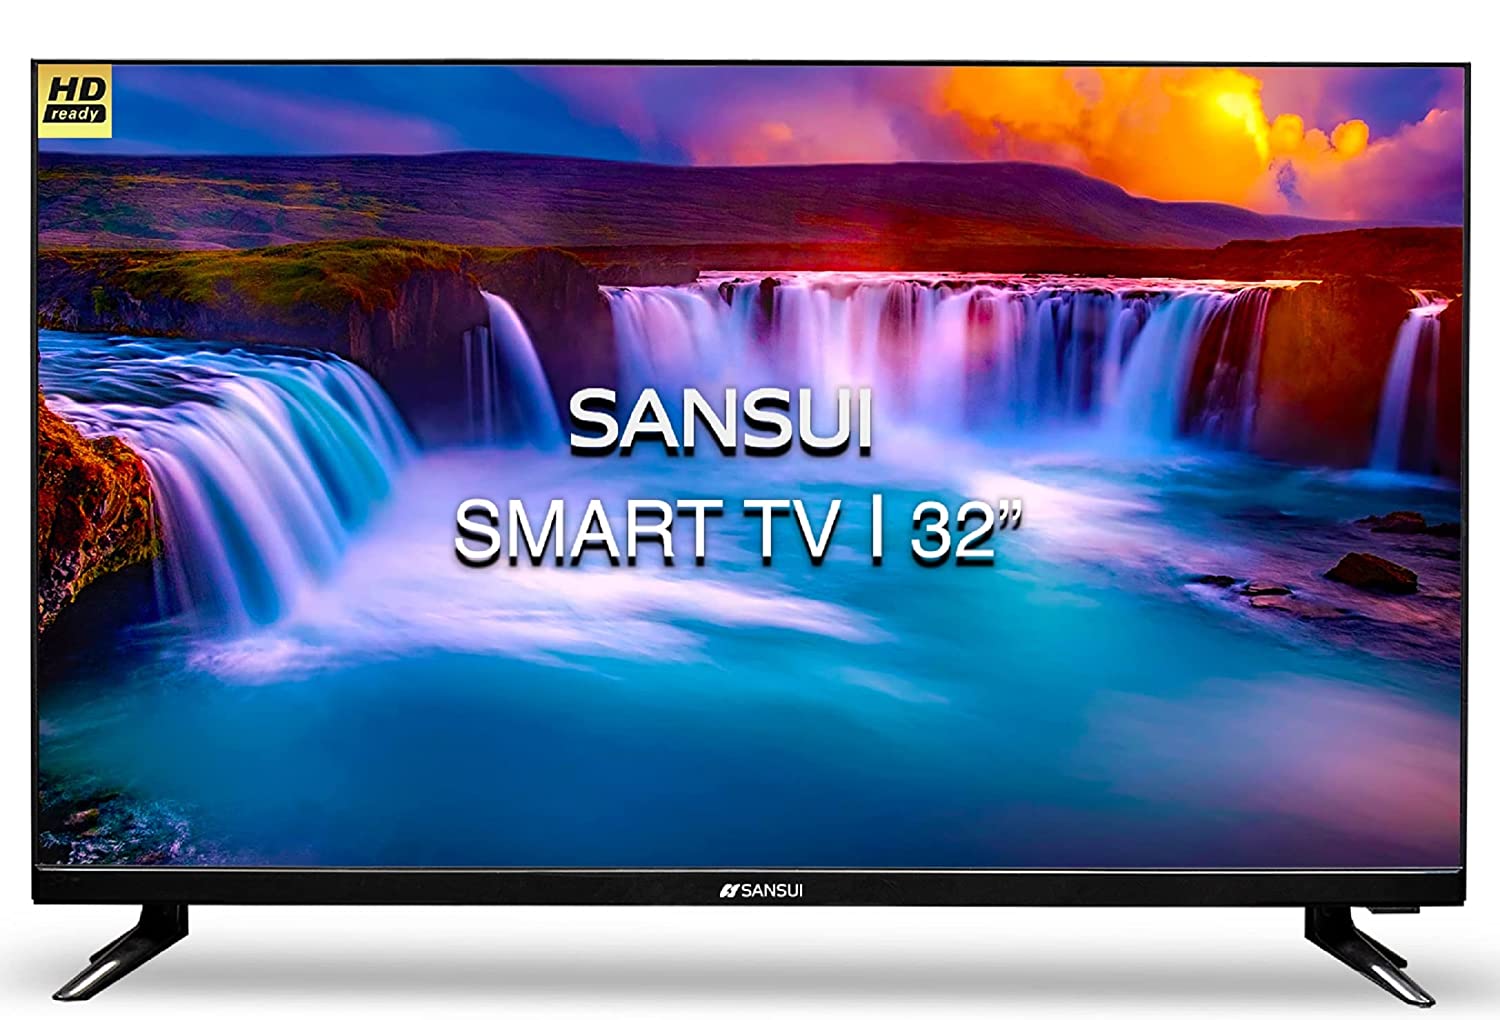 Sansui 80cm (32 inches) HD Ready Smart LED TV JSY32SKHD (BLACK) (2021 Model) | With Bezel-less Design